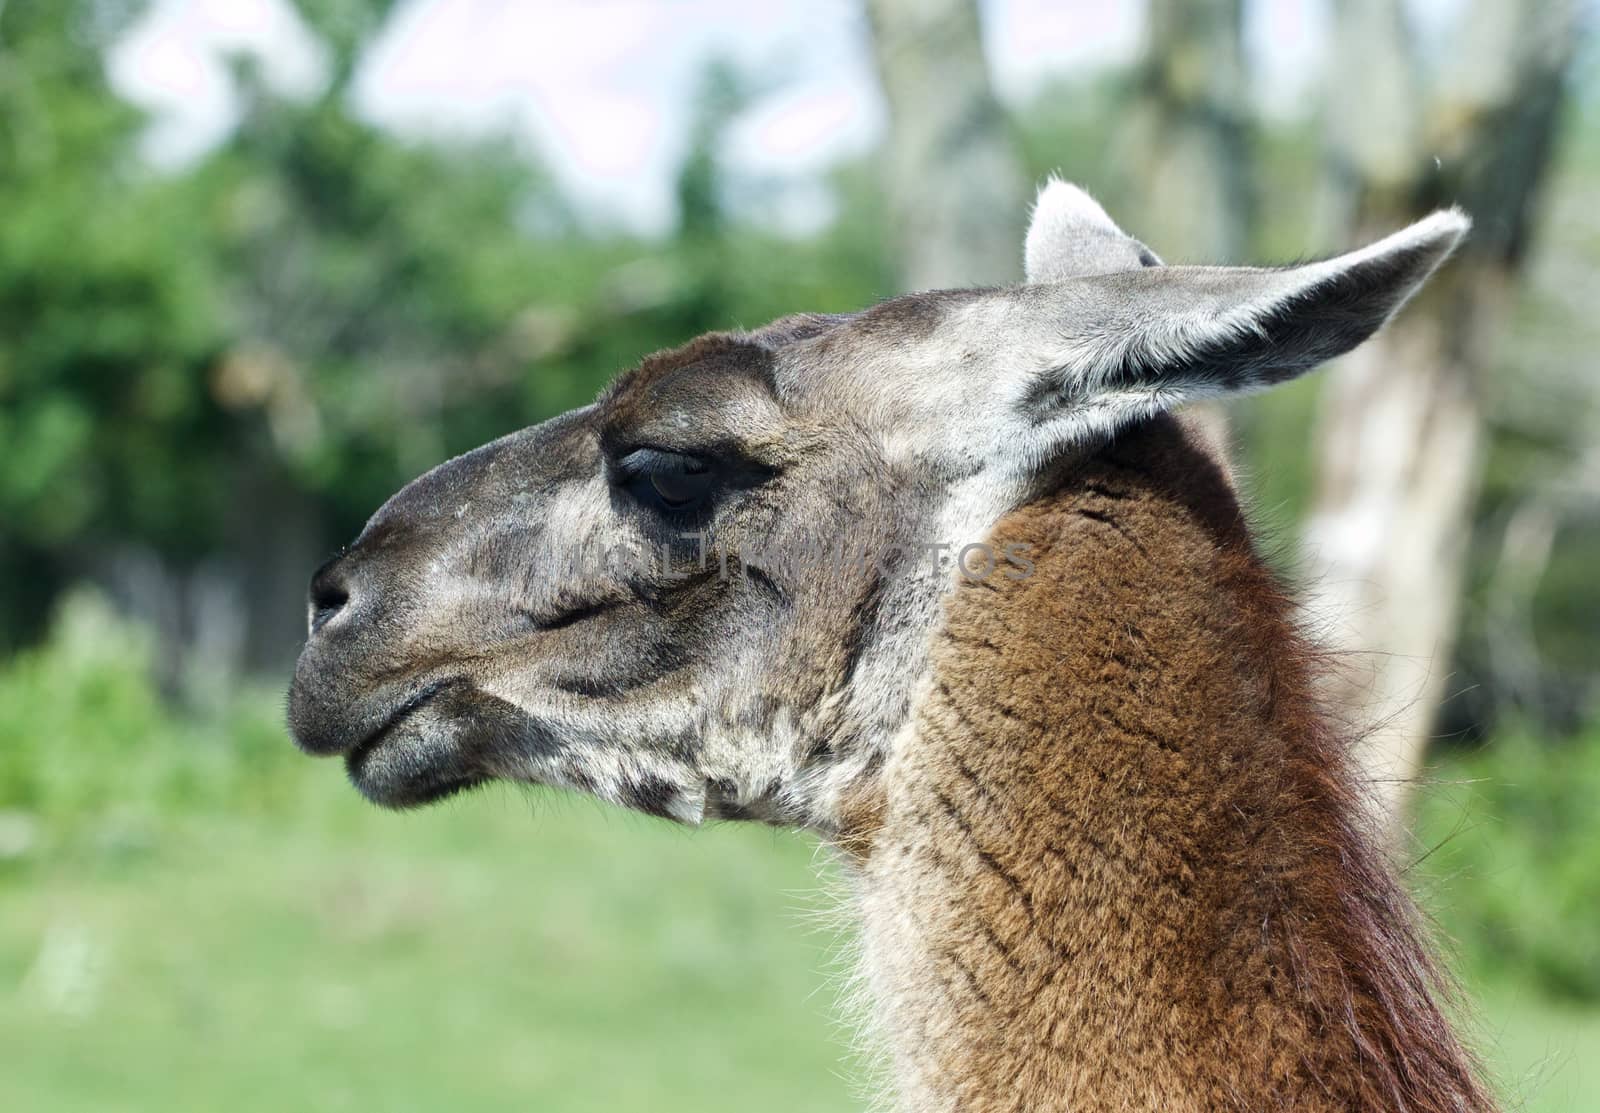 The portrait of the beautiful thoughtful llama